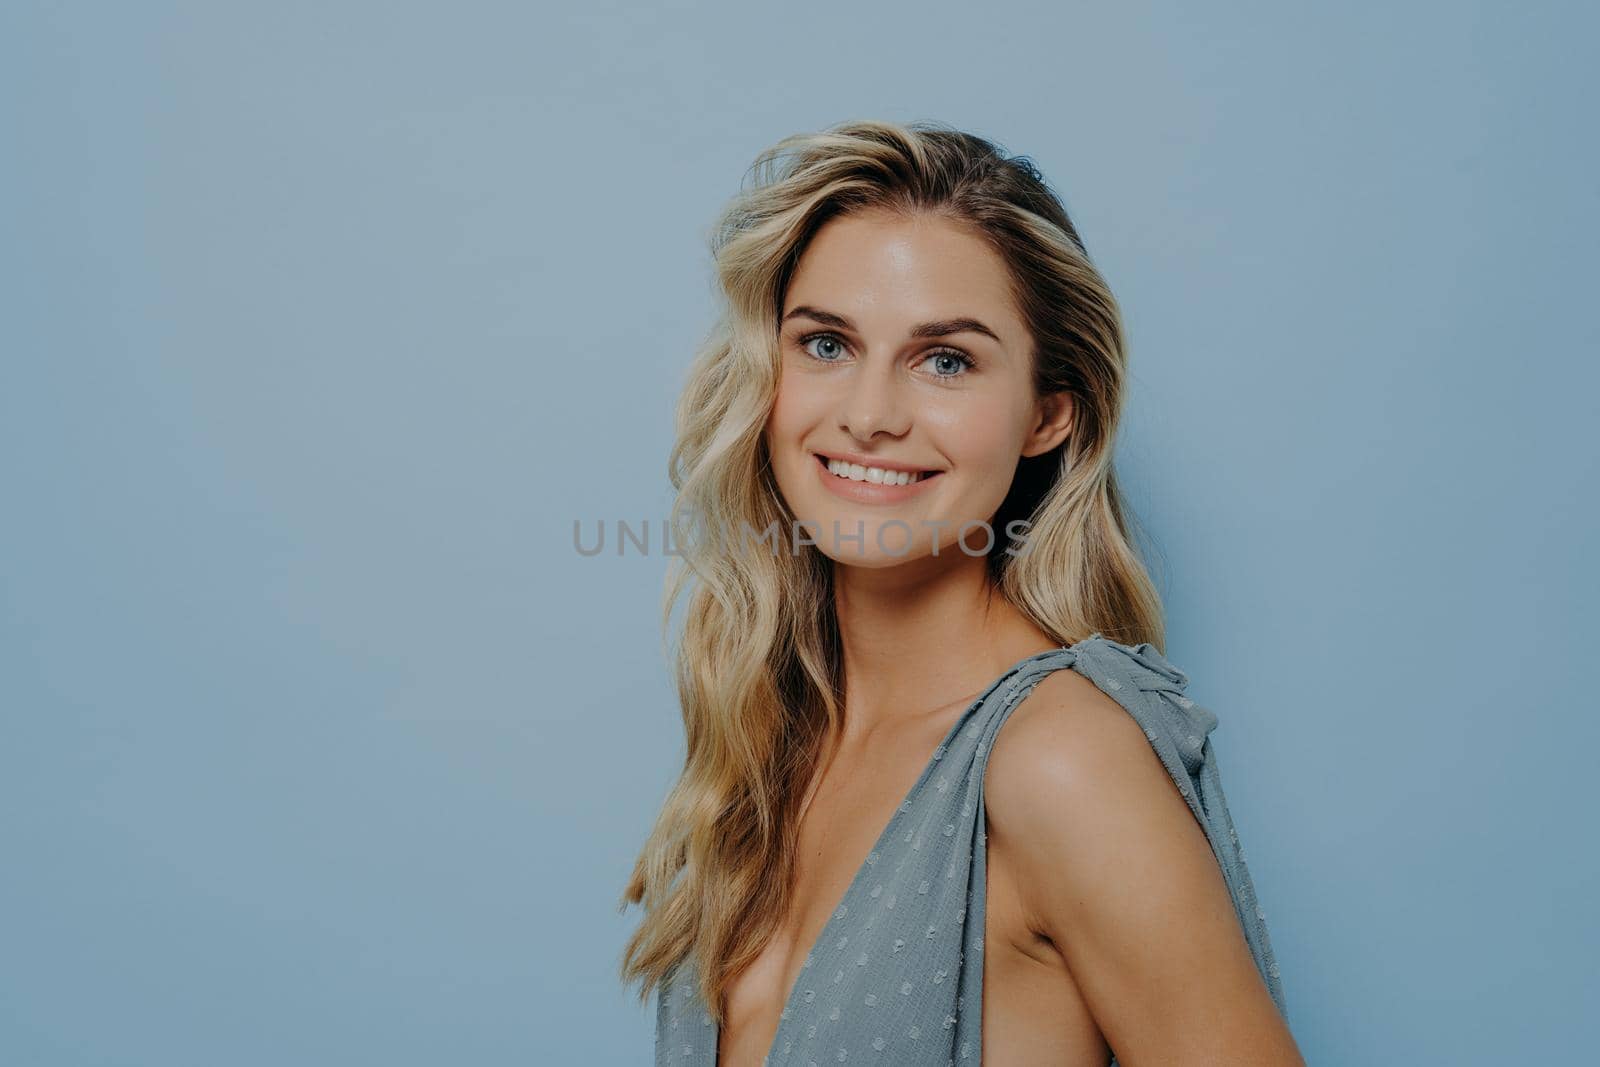 Cheerful smiling blonde girl in blue dress posing in studio by vkstock